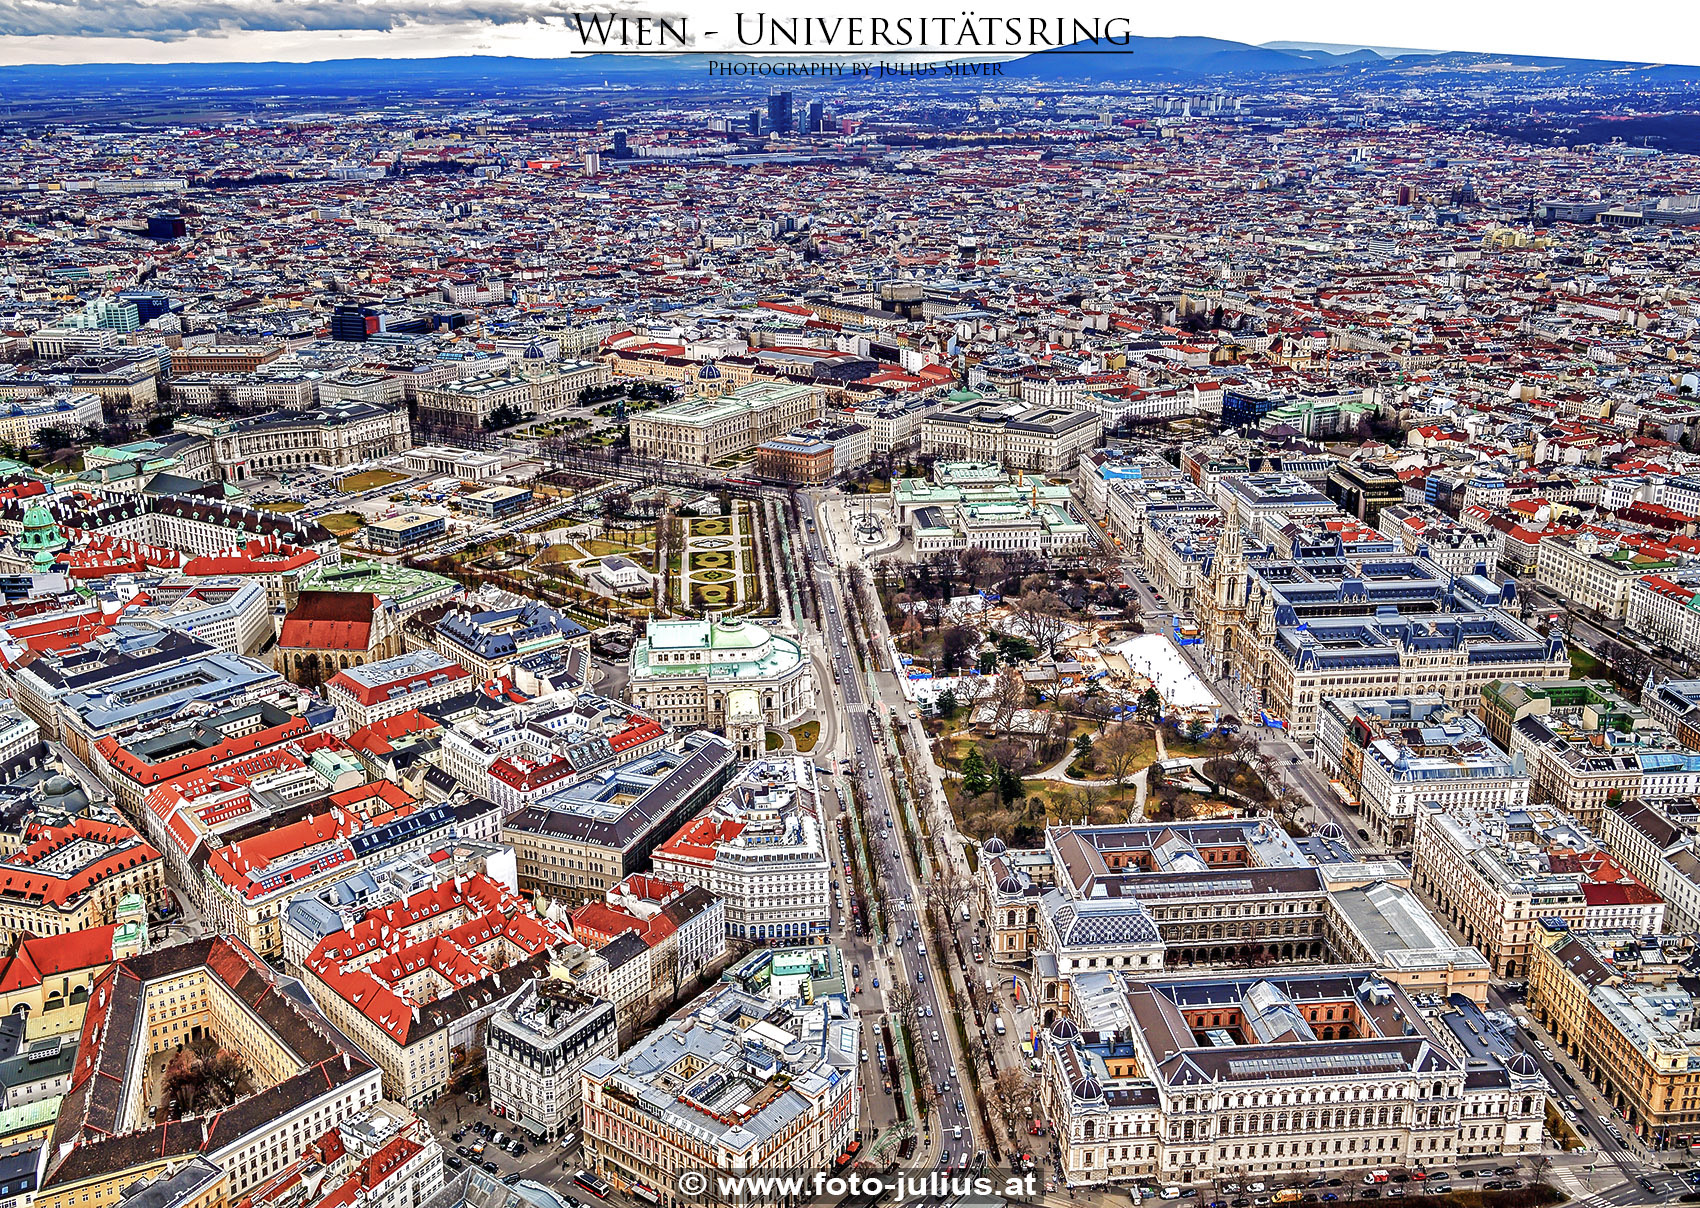 W6483a_Universitaetsring_Rathaus_Universitaet_Wien.jpg, 1,4MB